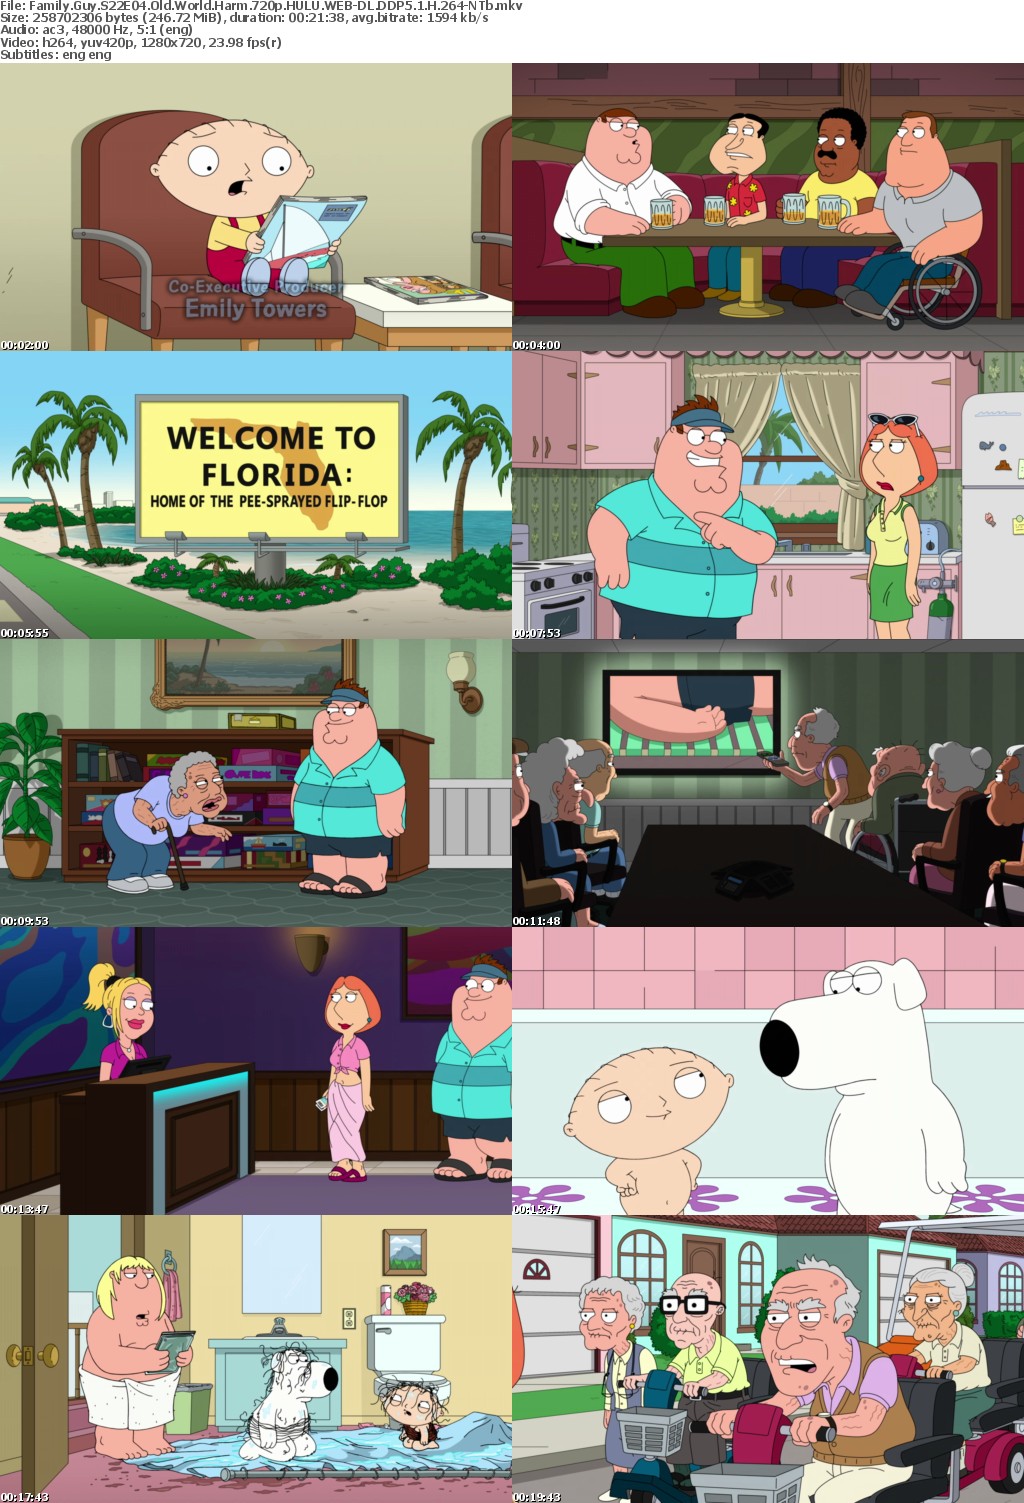 Family Guy S22E04 Old World Harm 720p HULU WEB-DL DDP5 1 H 264-NTb